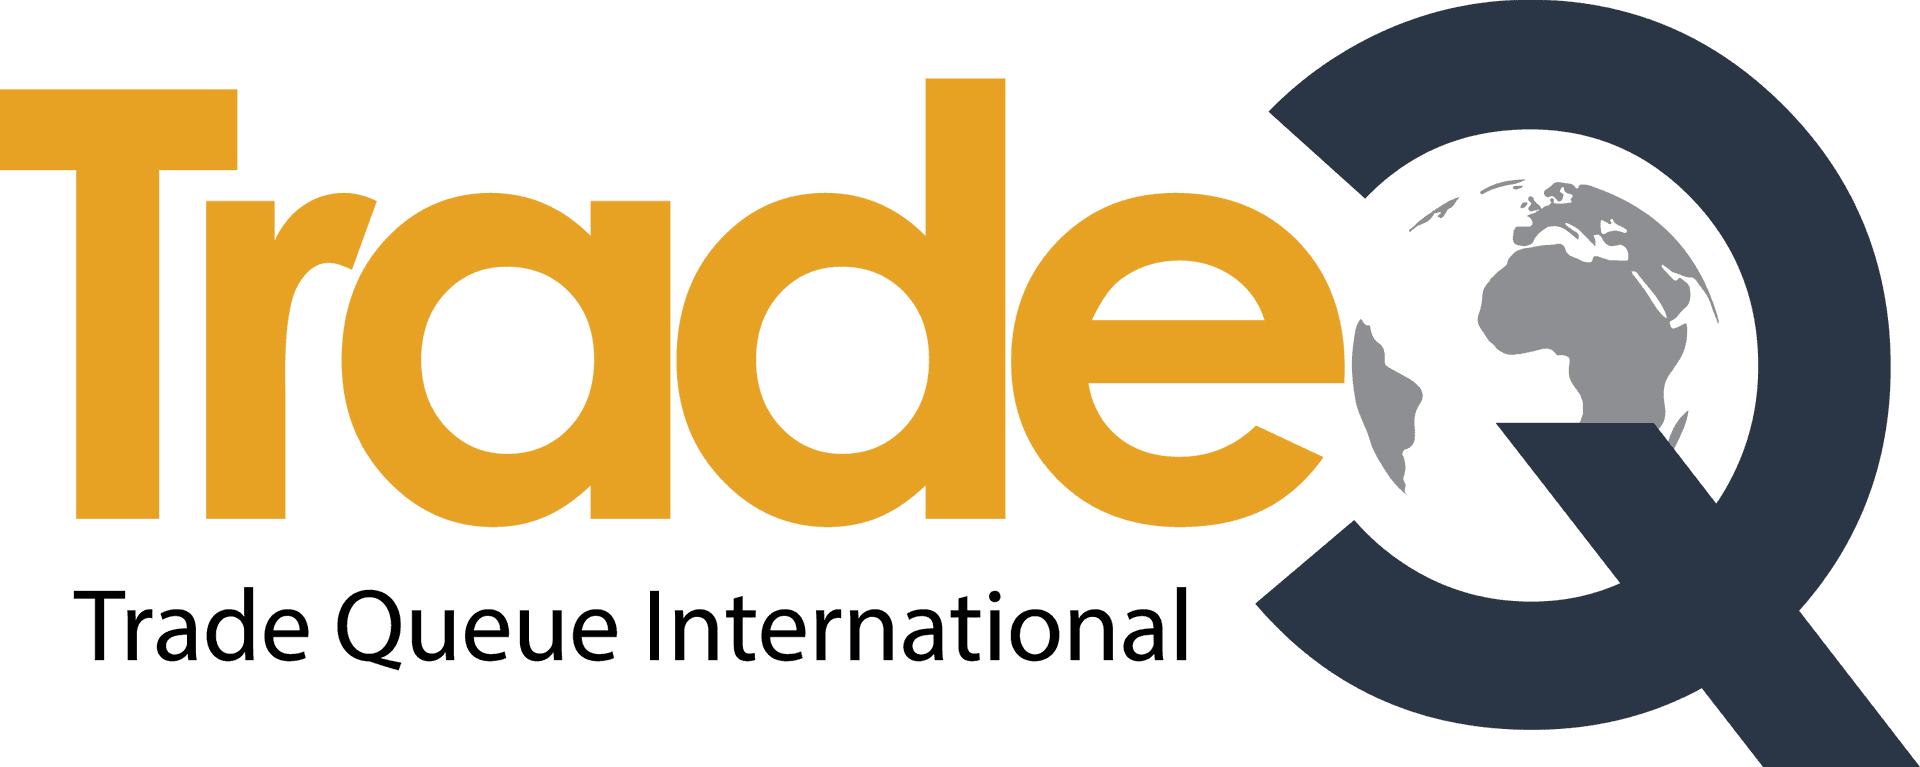 Trade Queue International Logo PNG image